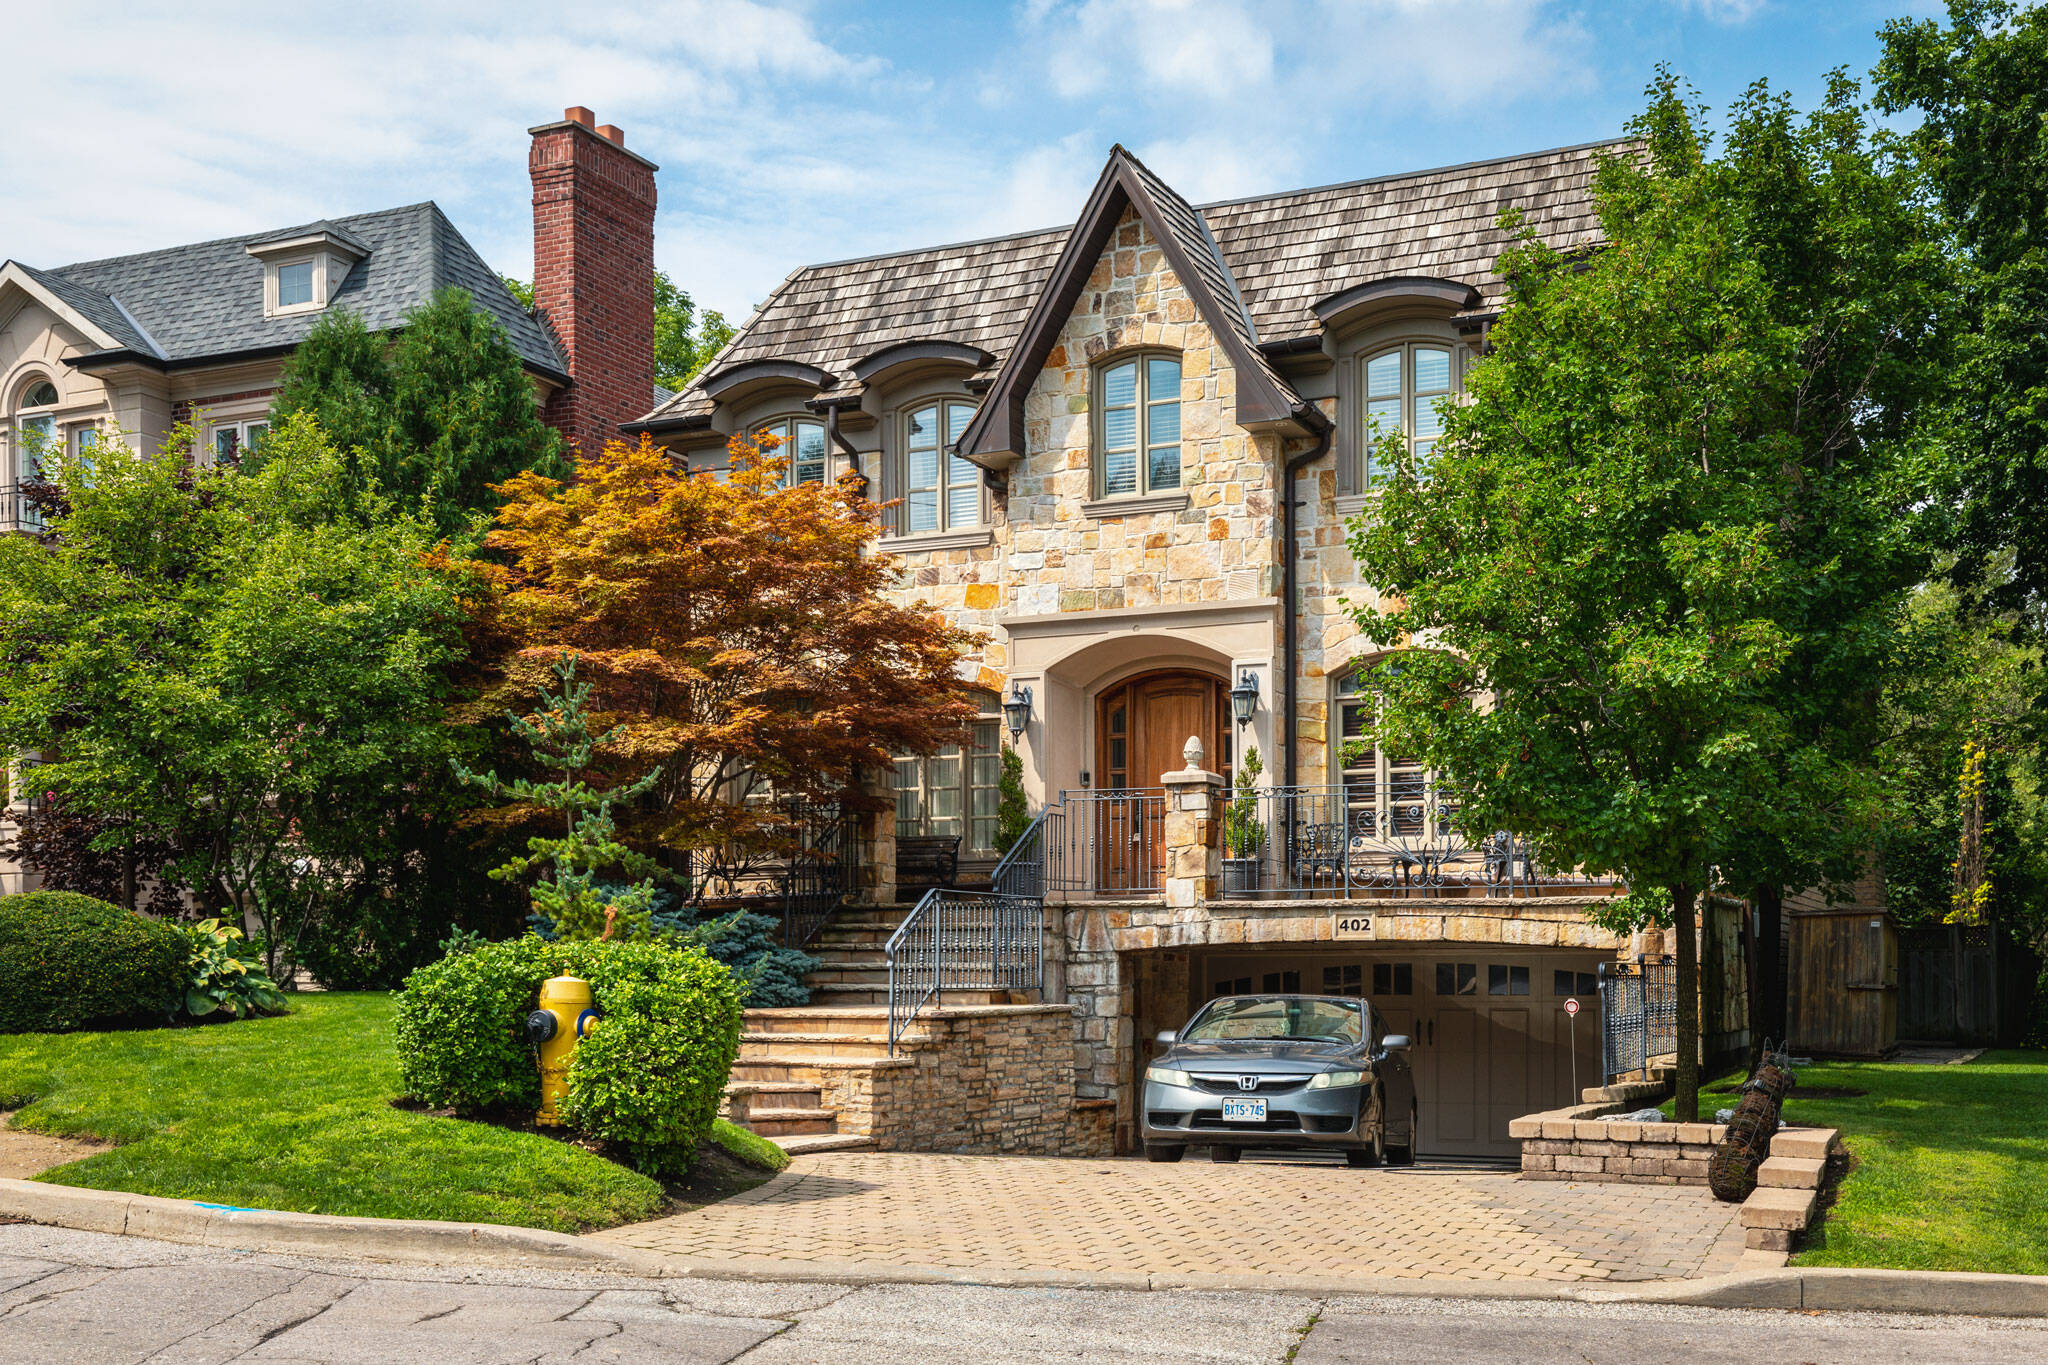 Experts say the Toronto real estate market is facing a major crisis